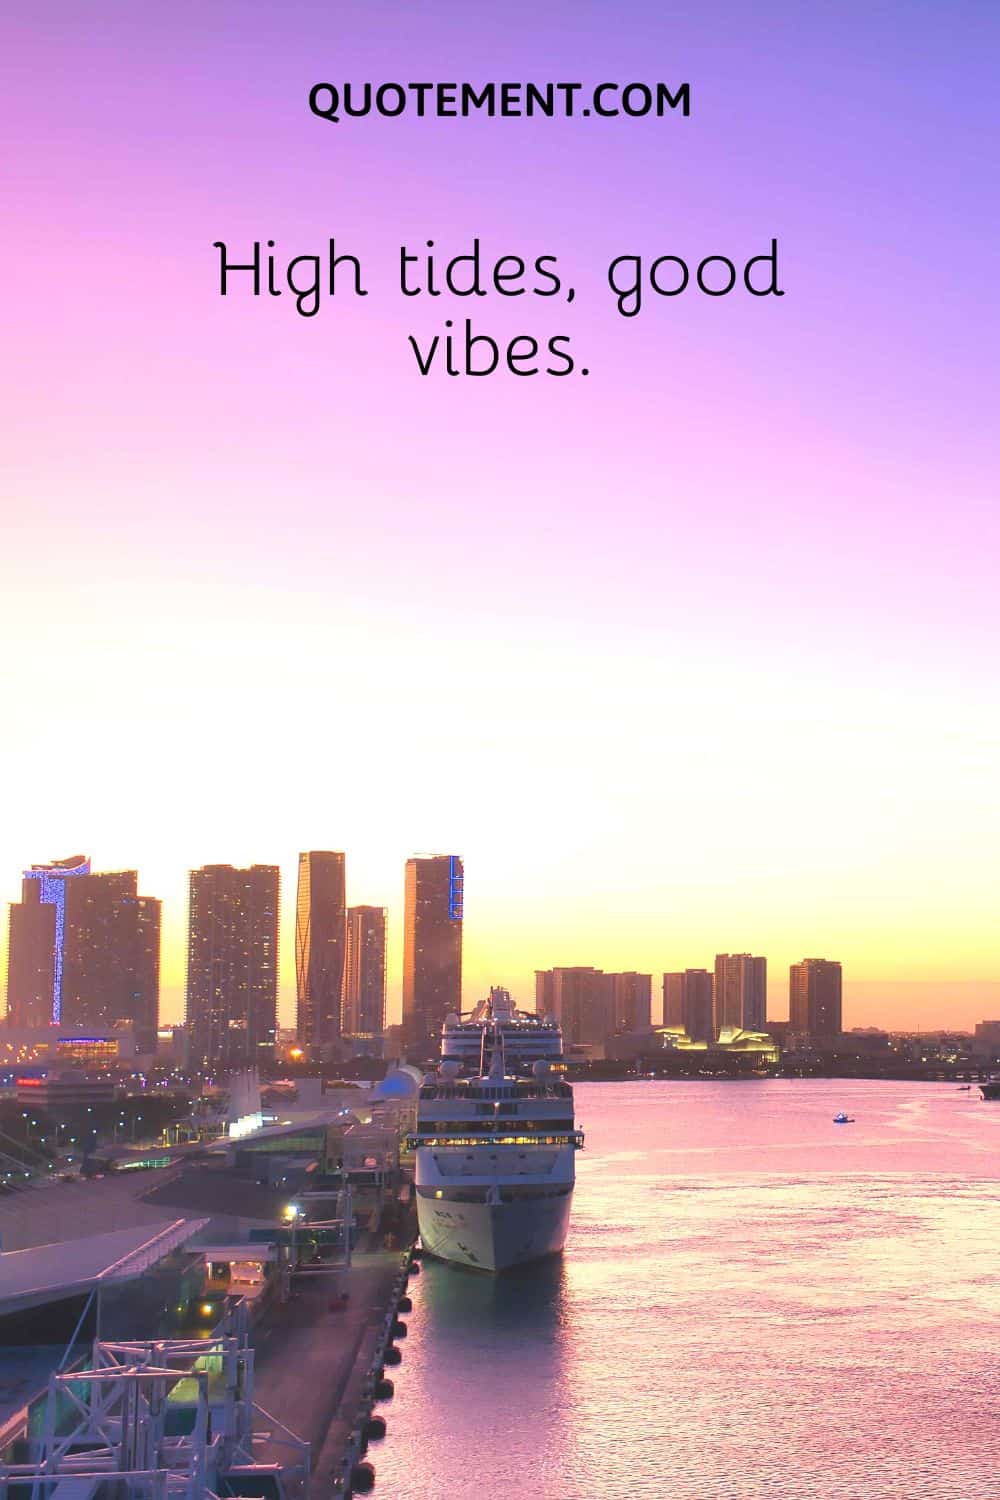 High tides, good vibes